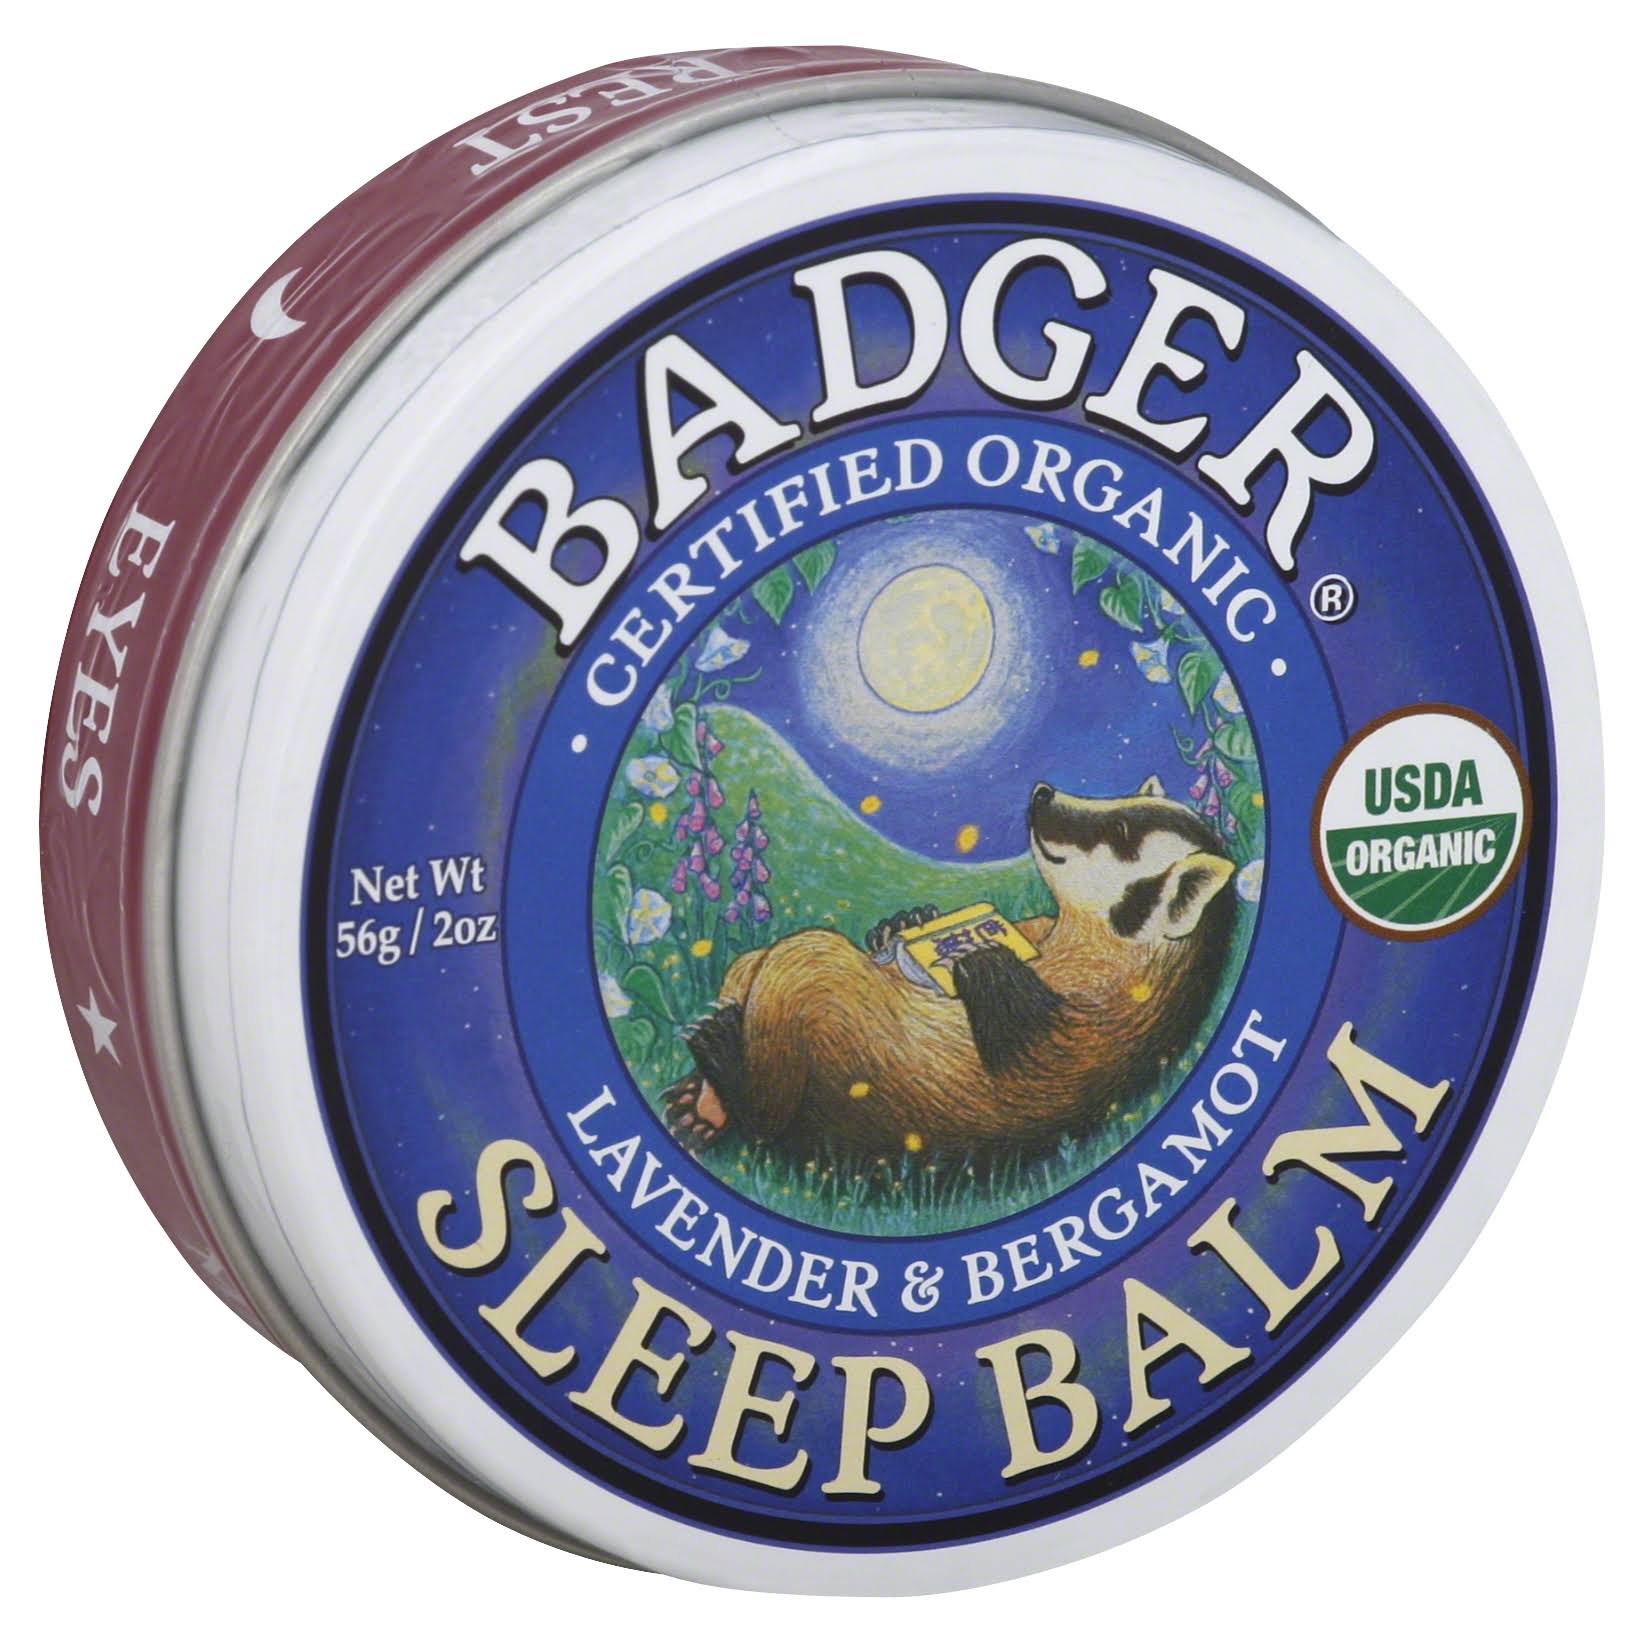 Badger Organic Sleep Balm - Lavender & Bergamot